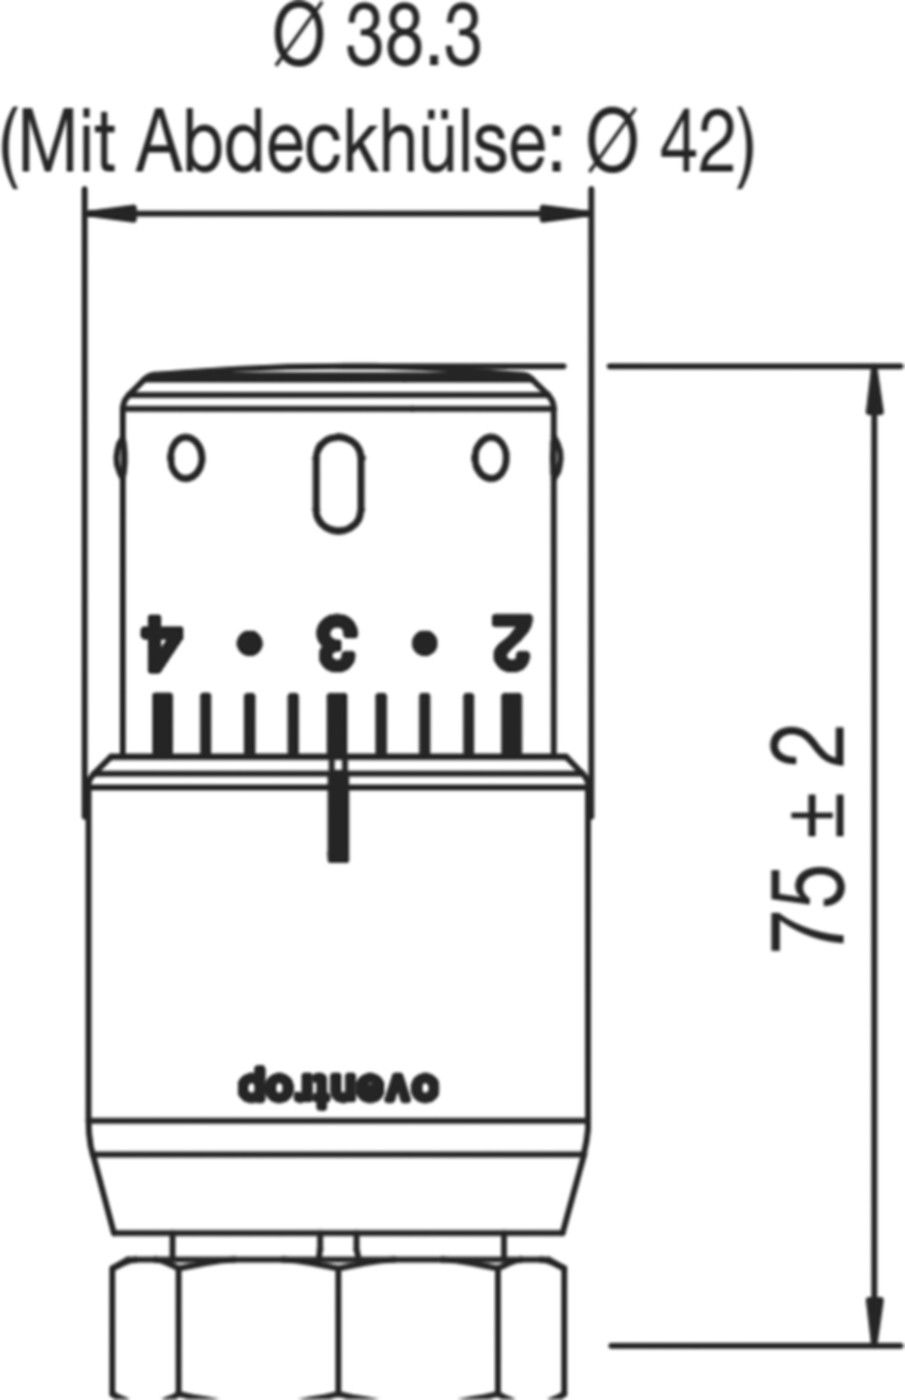 Thermostatfühler m/Fühler verchromt Uni SH m/Nullst. 7-28°C 101 20 69 - Oventrop Programm